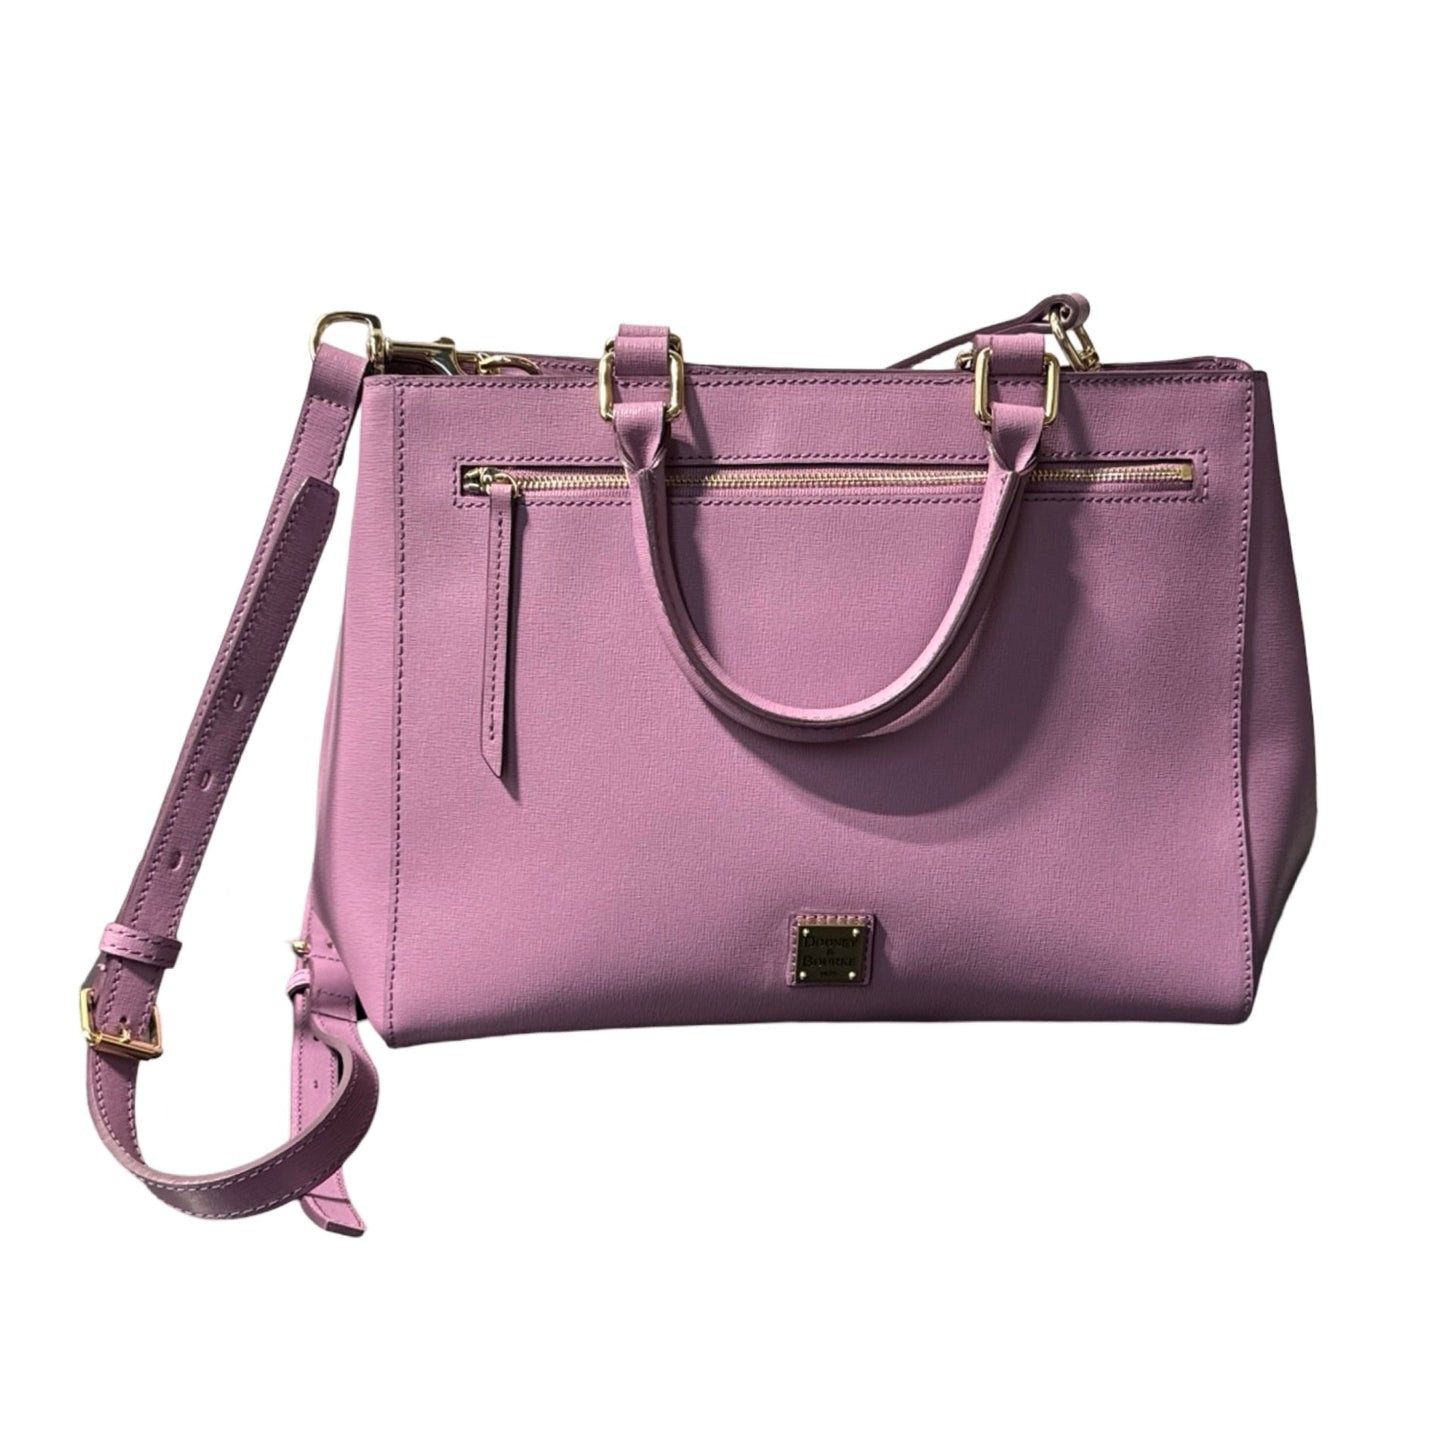 Purple Handbag Designer Dooney And Bourke, Size Medium